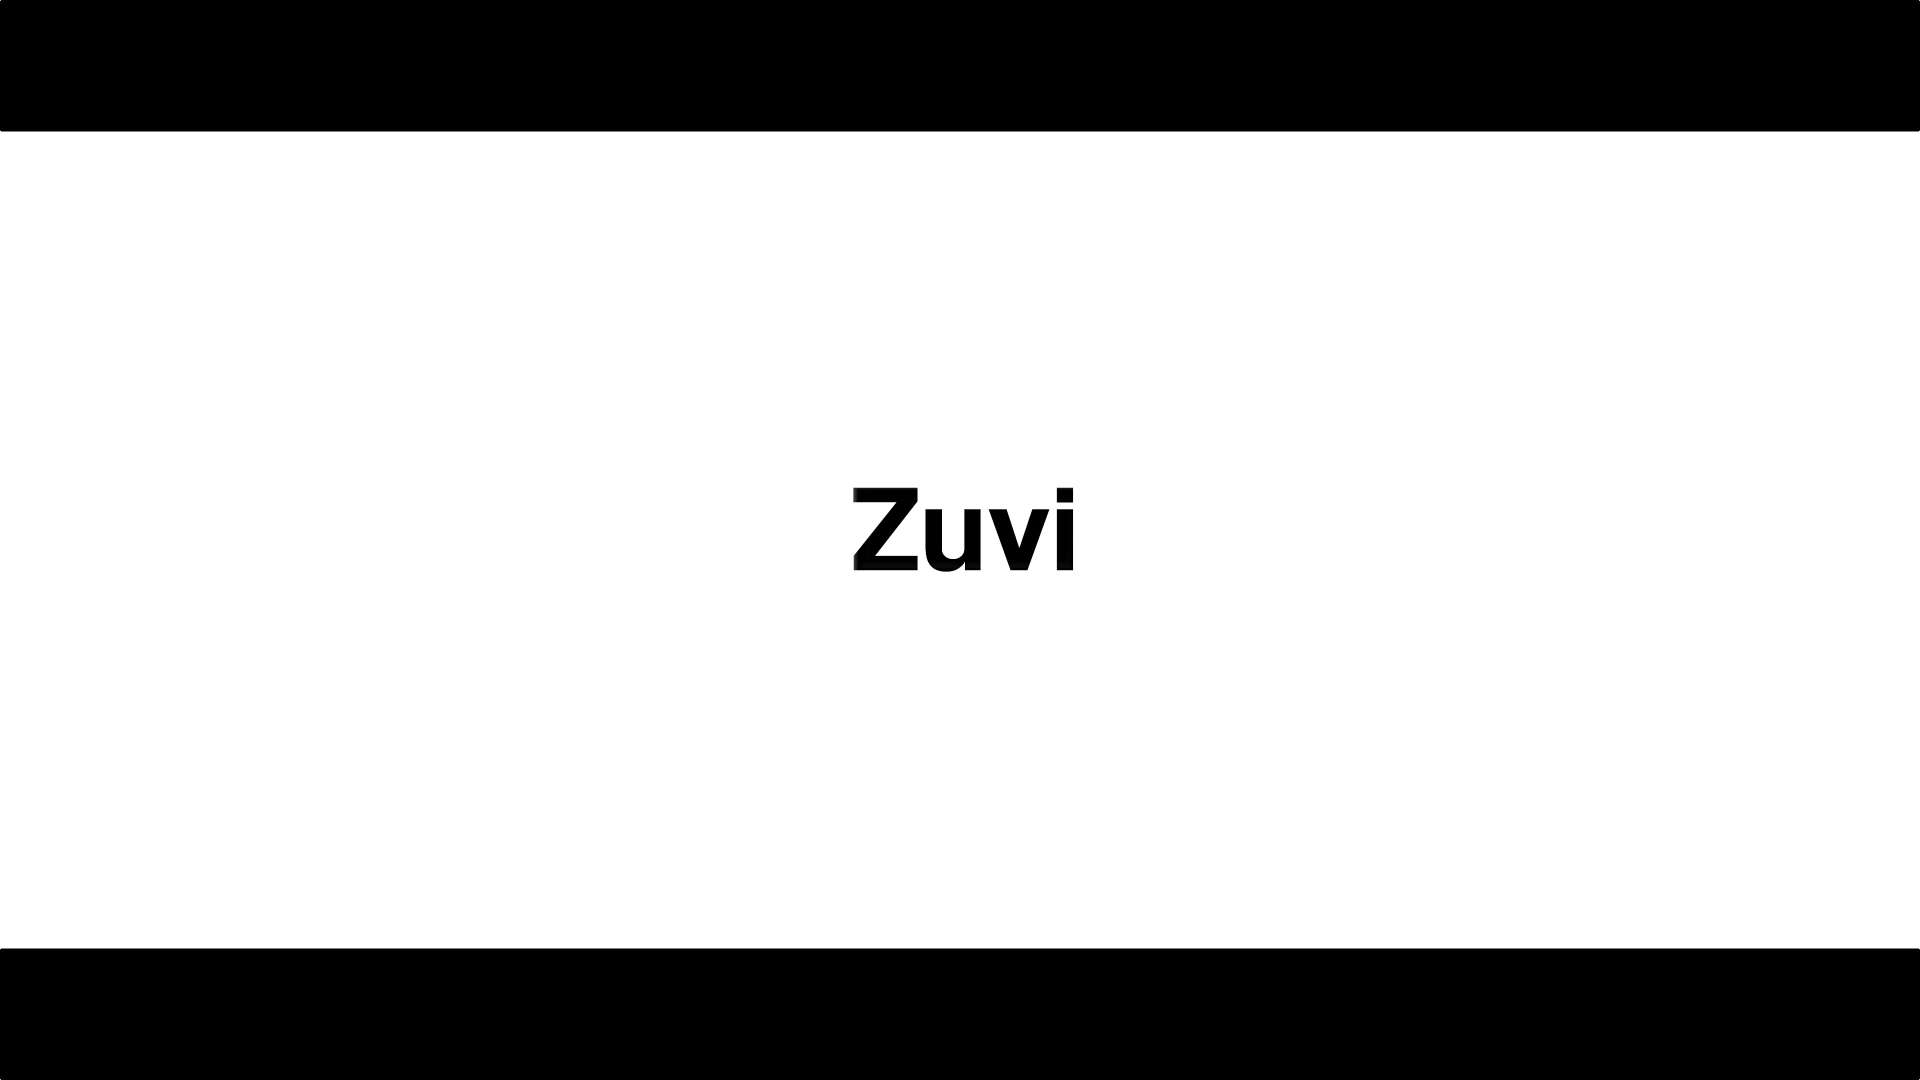 Zuvi - Introducing the Zuvi Halo